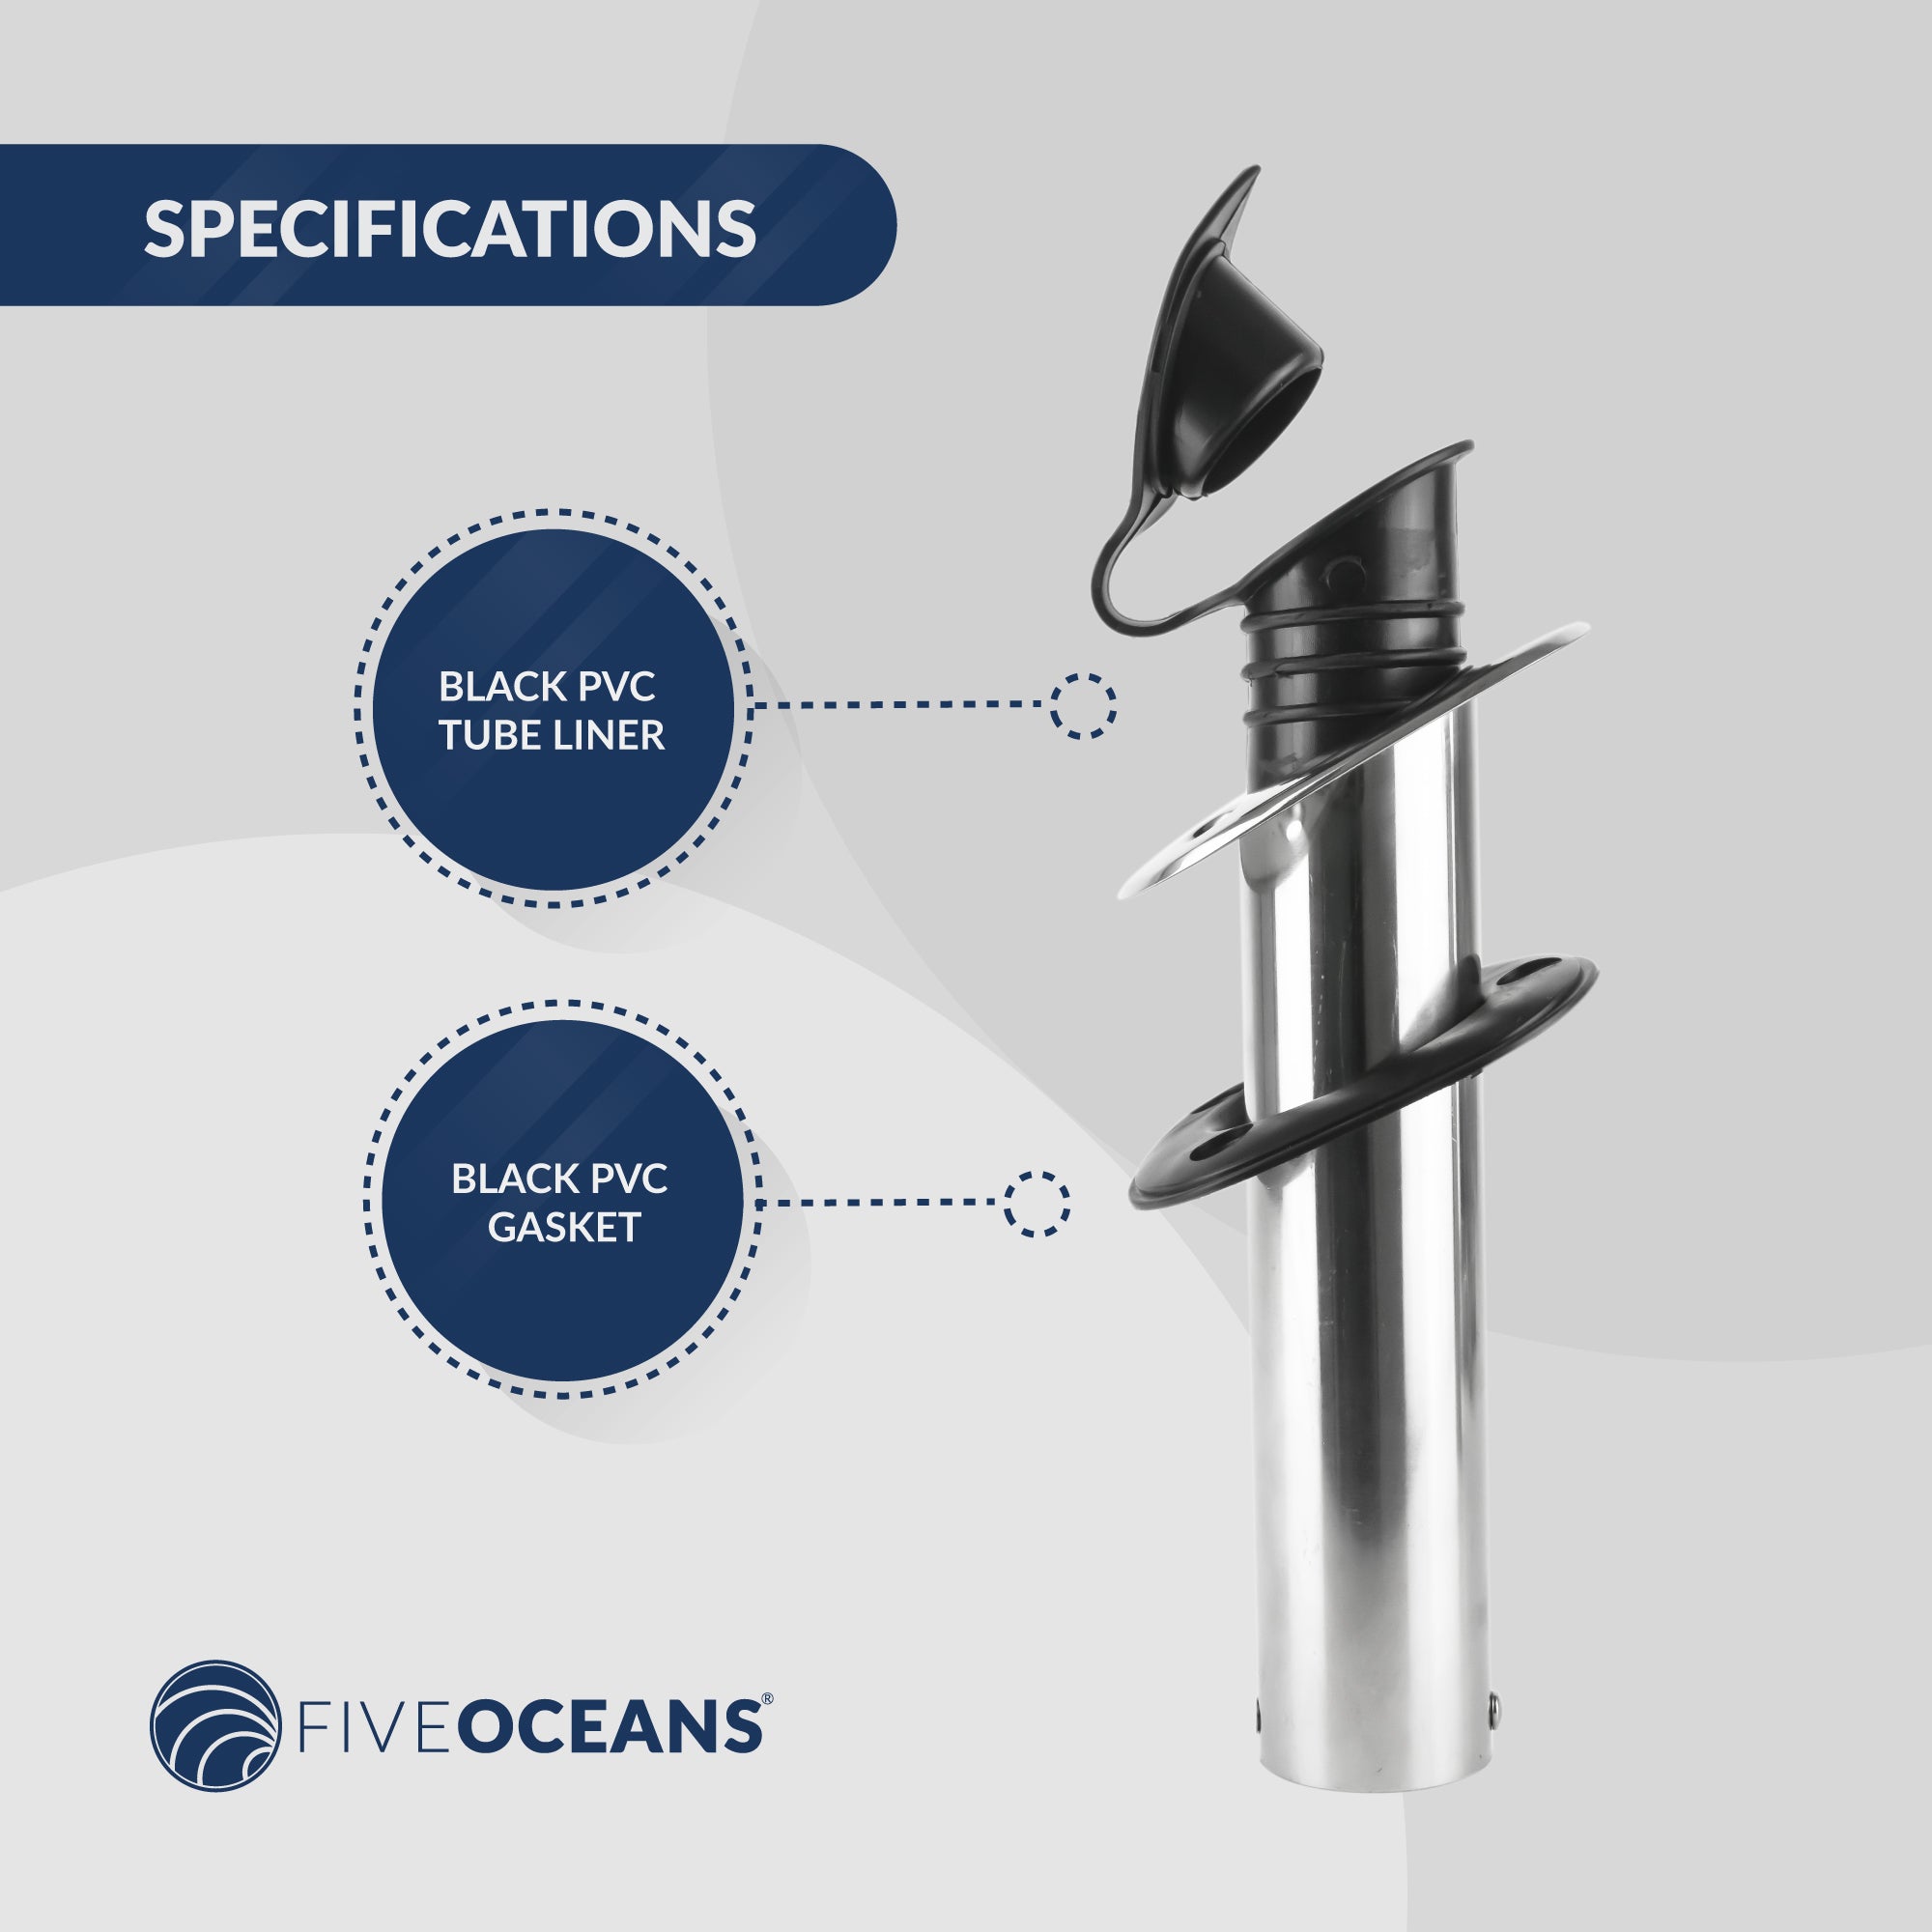 Five Oceans Flush-Mount Fishing Rod Holder 30-Degree Top Flange w/ Flip-Up Cap, Open Base End Stainless Steel (4 Pack) Fo4497-m4